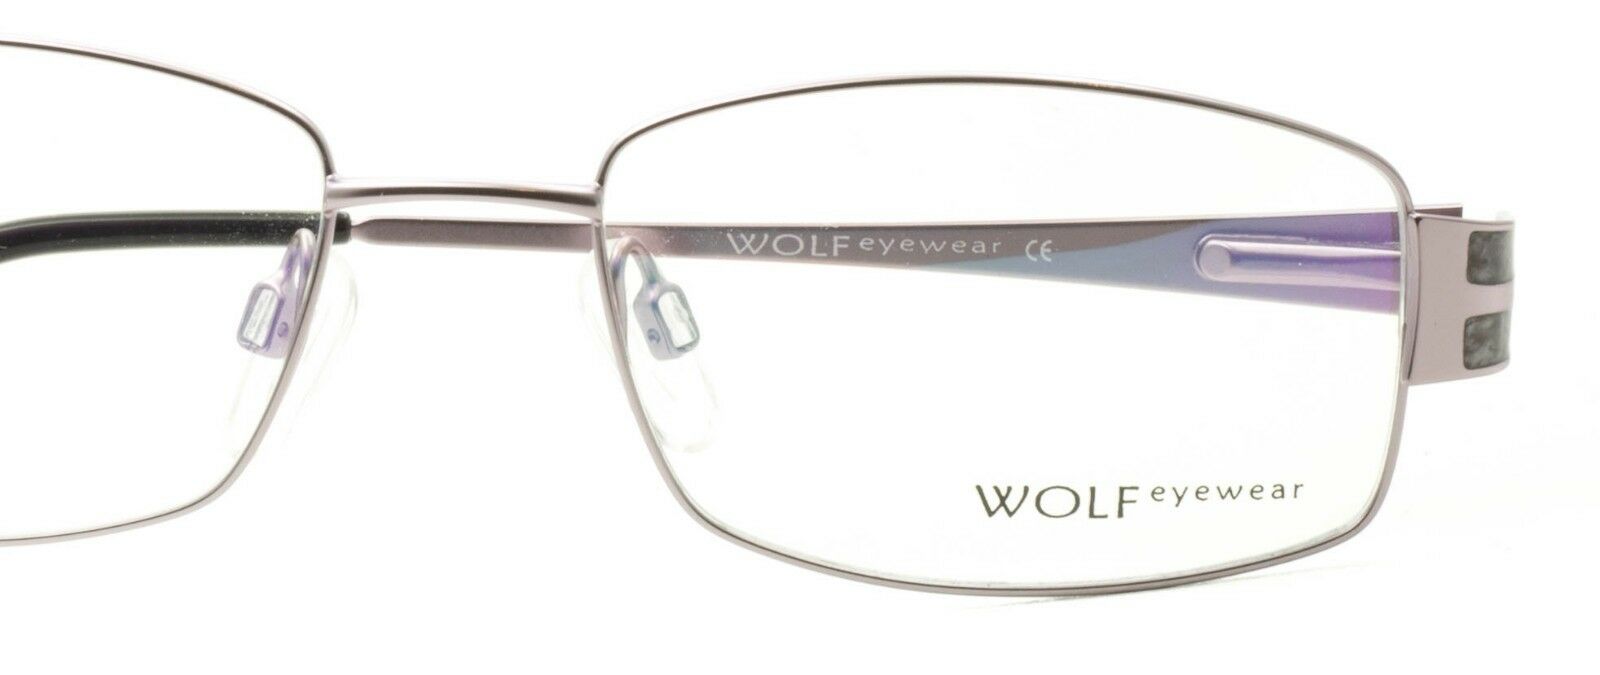 WOLF EYEWEAR 1013 C61 Titanium FRAMES RX Optical Glasses Eyeglasses Eyewear New